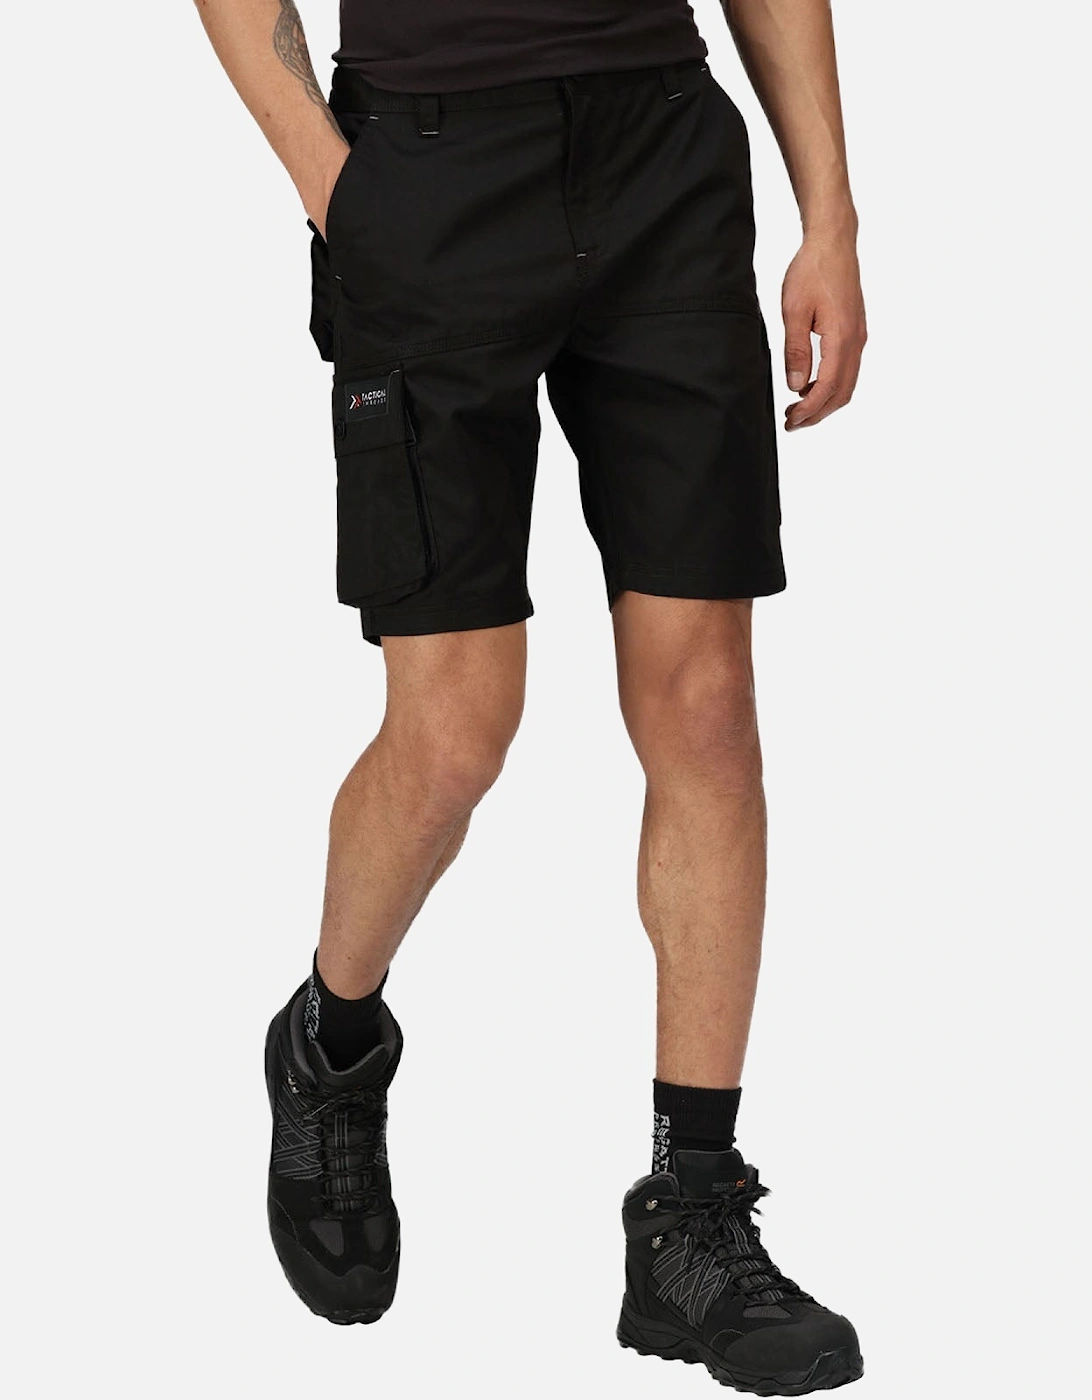 Professional Mens Heroic Workwear Cargo Shorts